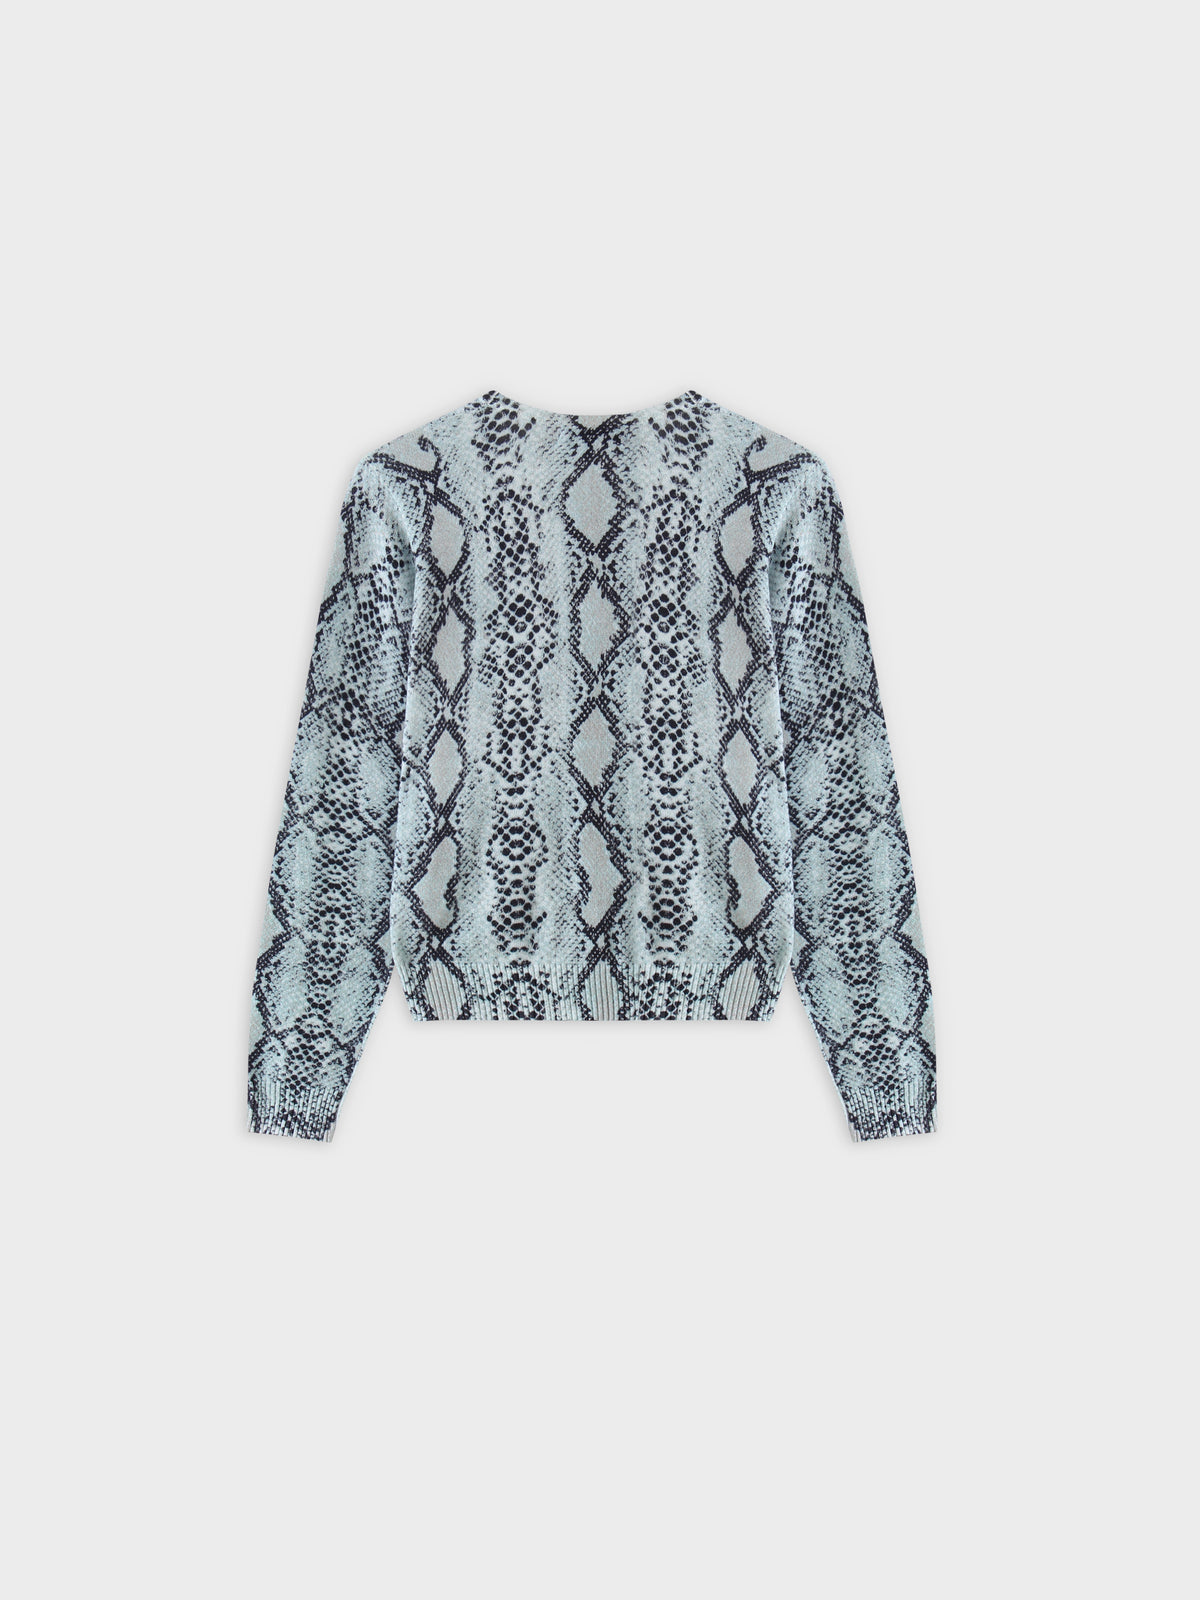 Printed Sweater-Mint Reptile